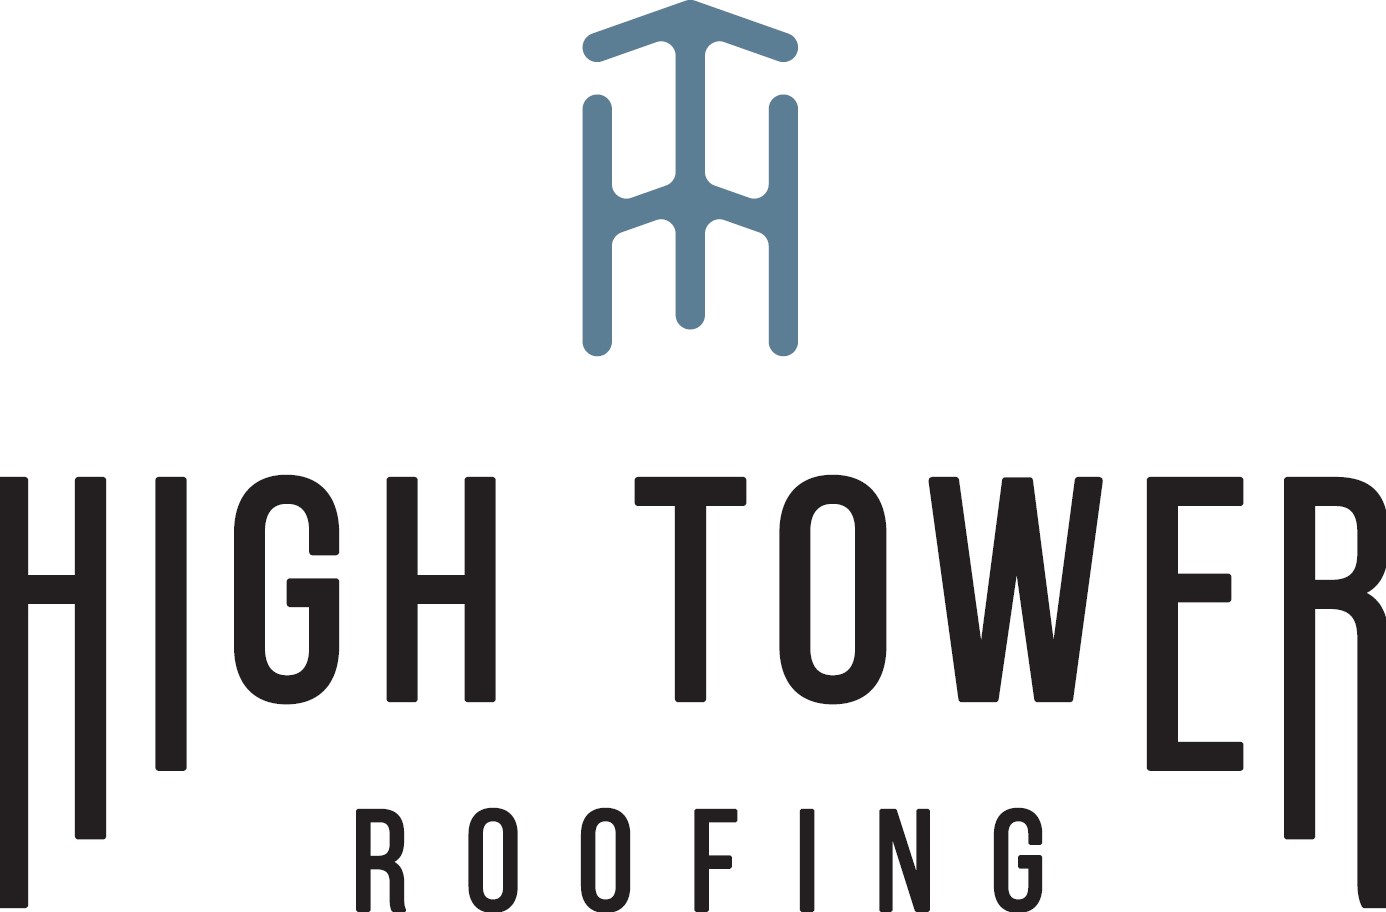 Hightower Roofing